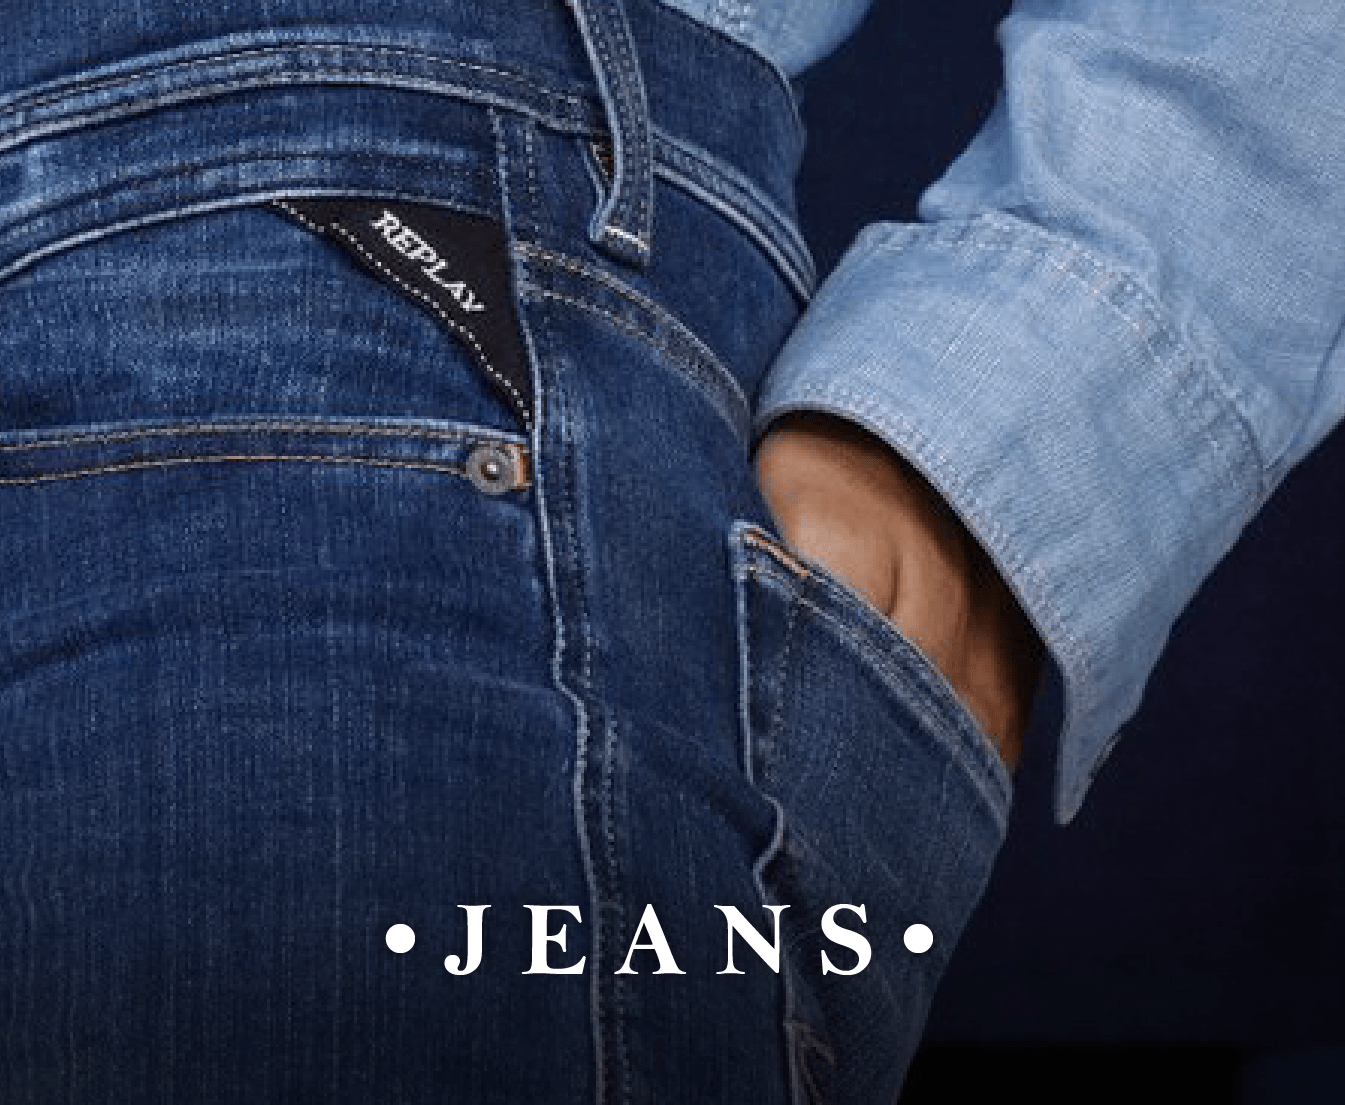 Todo en jeans, denim Replay Colombia